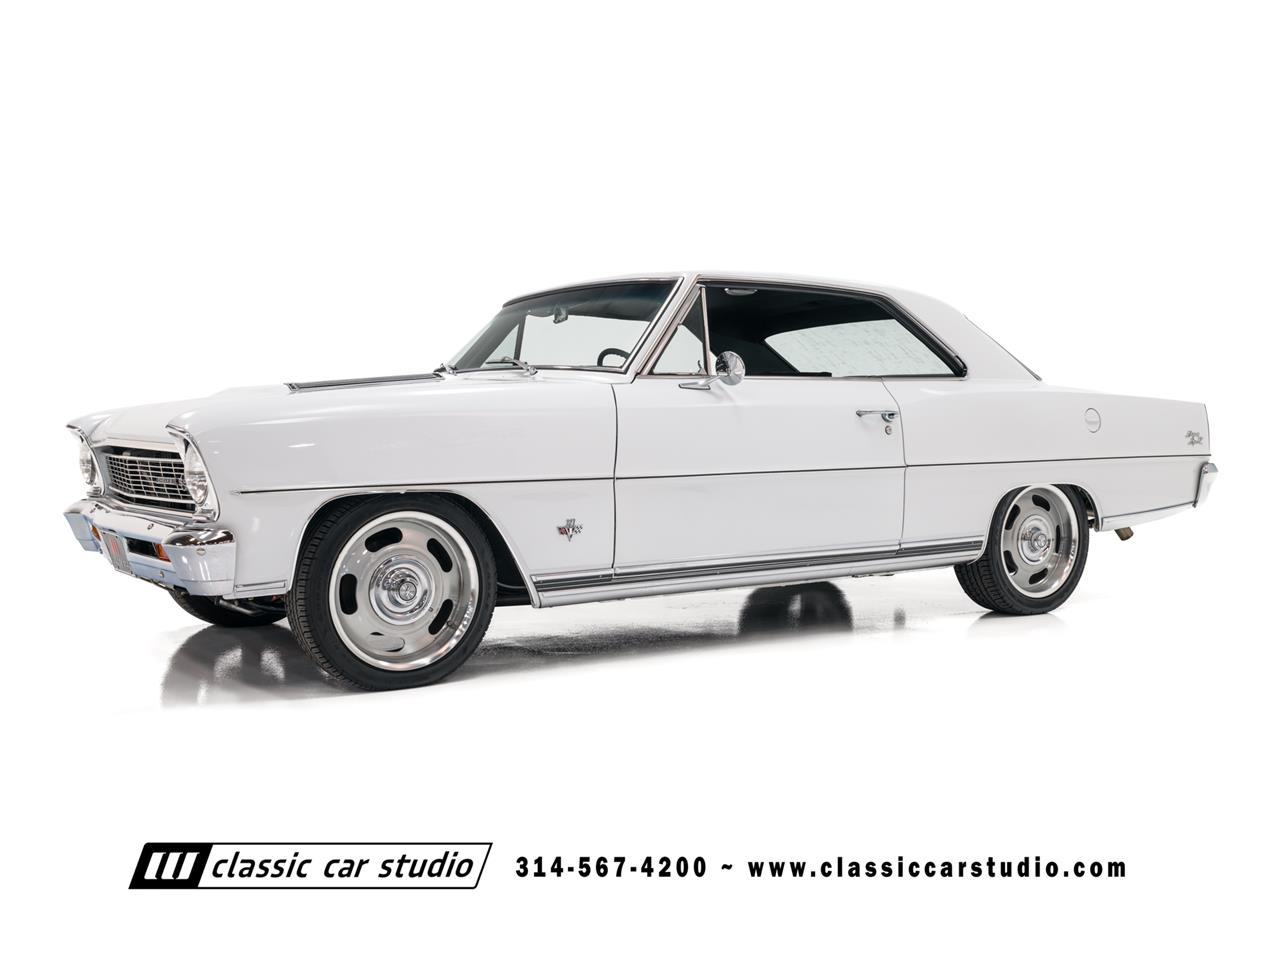 For Sale: 1966 Chevrolet Nova in St. Louis, Missouri for sale in Saint Louis, MO